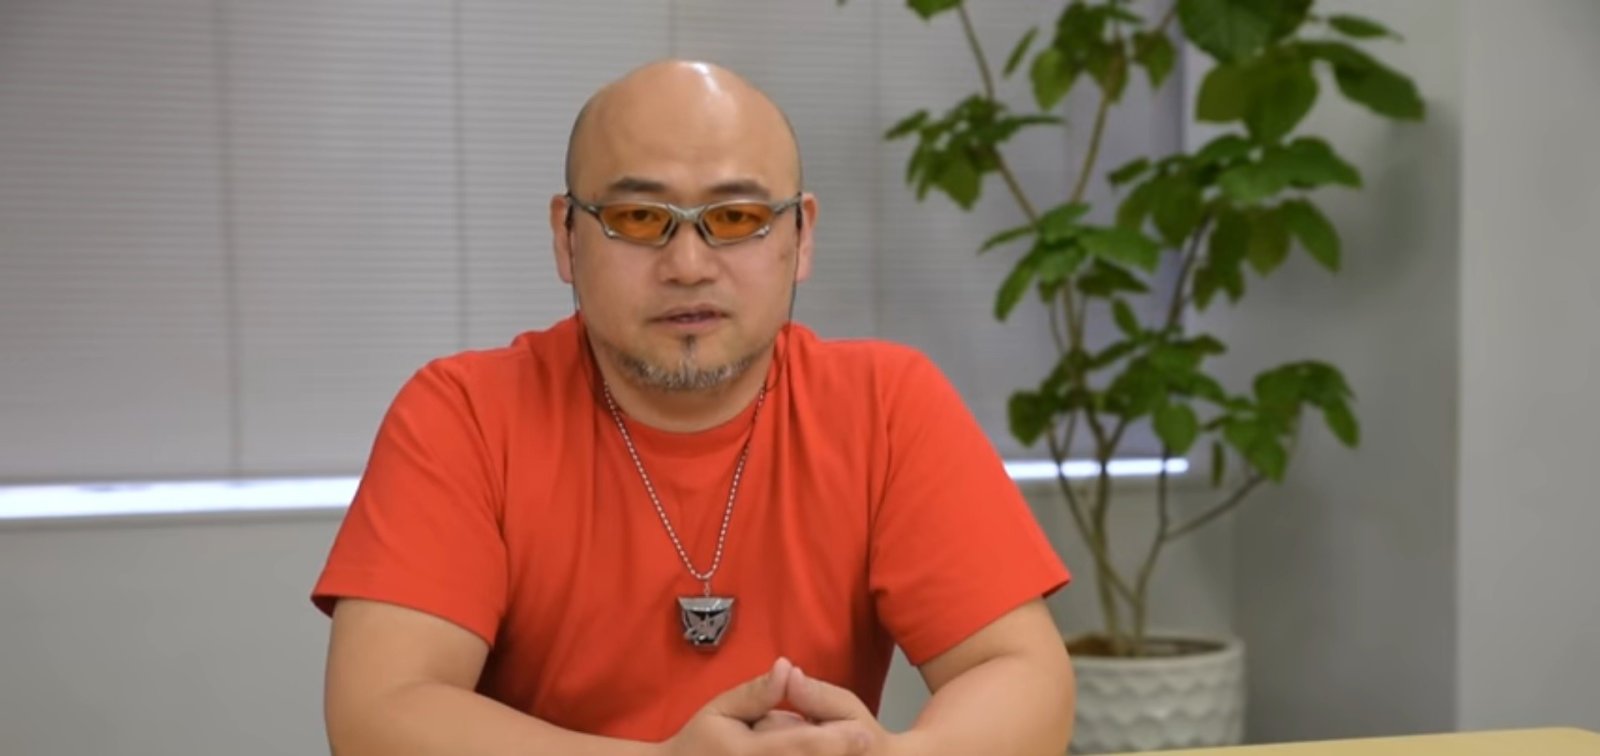 Hideki Kamiya อยากใช้คำว่า “J-Action” กับเกมแอ็กชันจากญี่ปุ่นและภูมิใจกับคำว่า “JRPG”